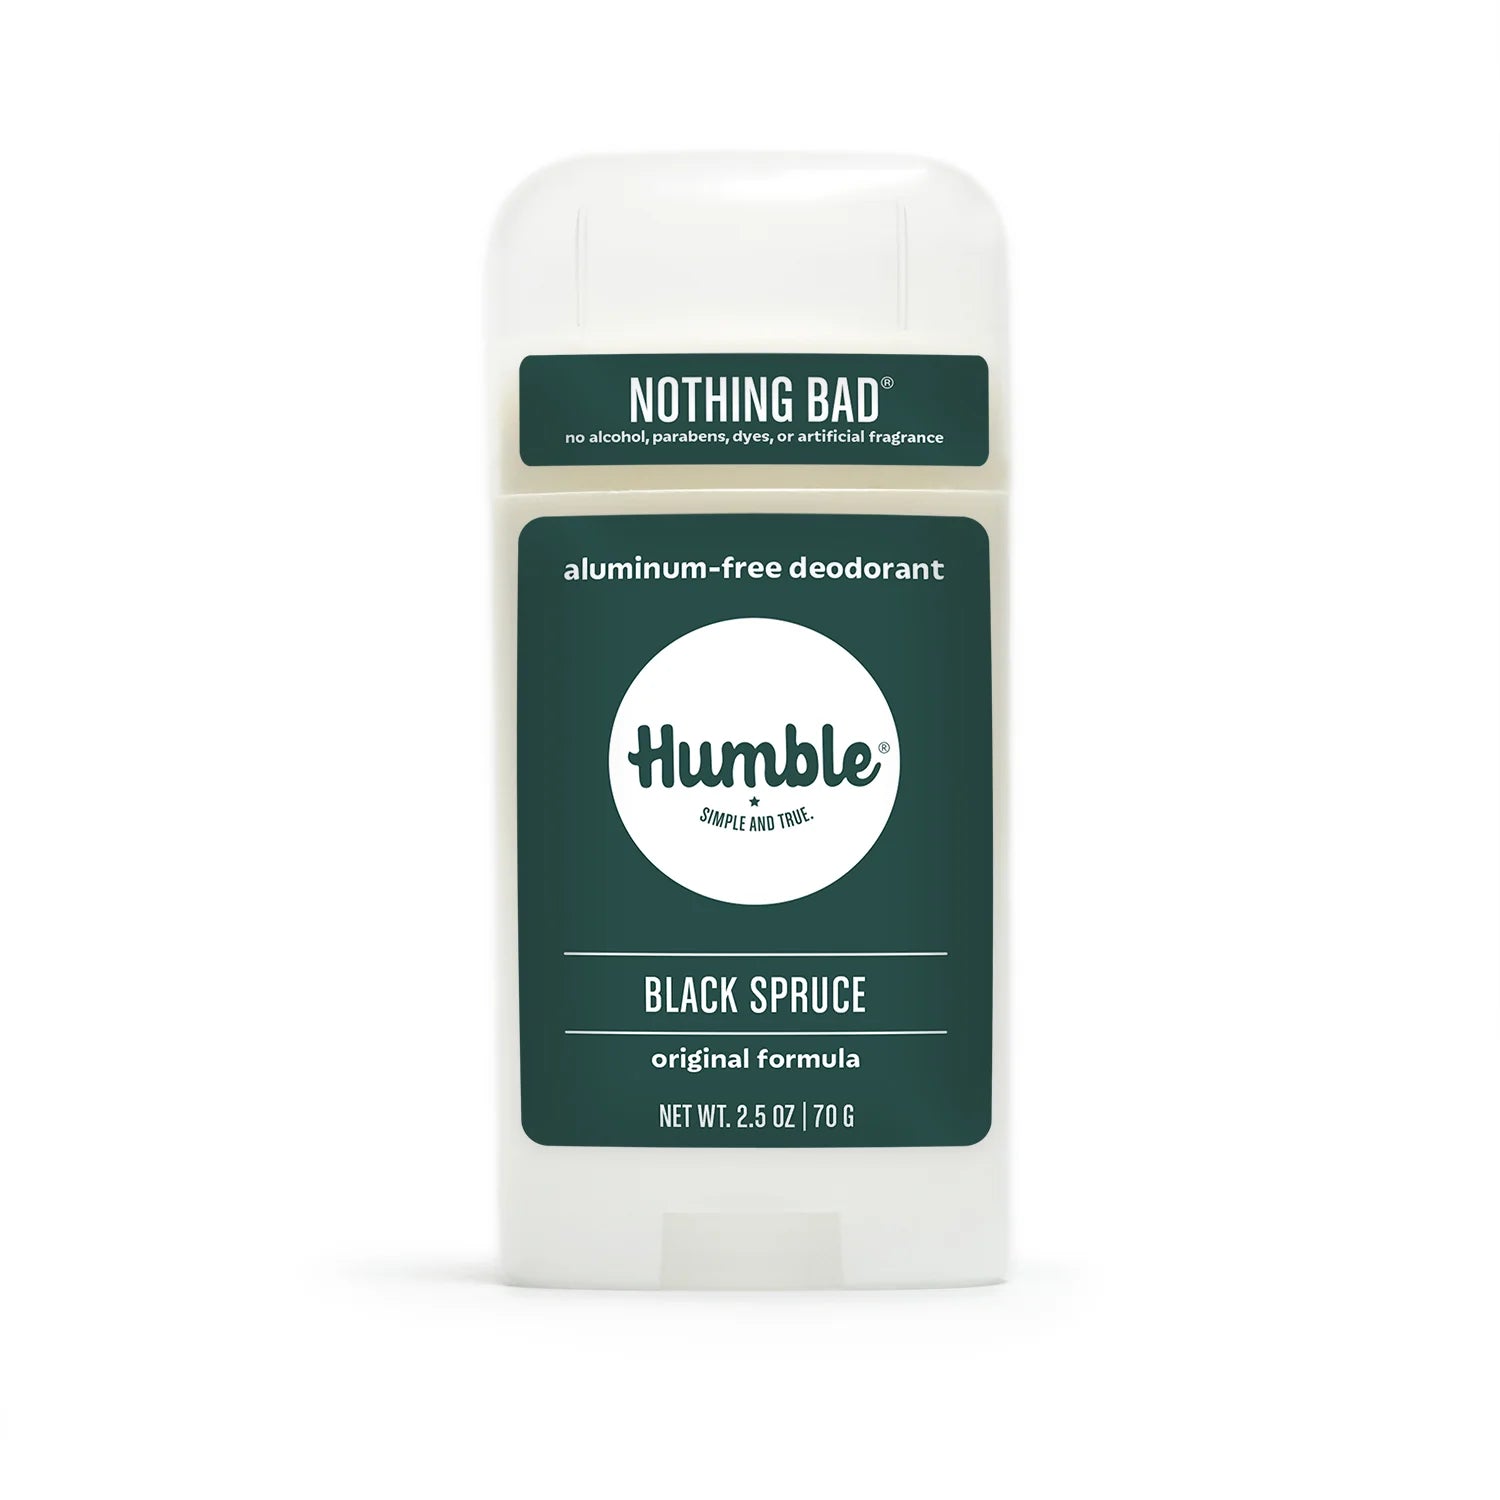 Humble Deodorant Black Spruce